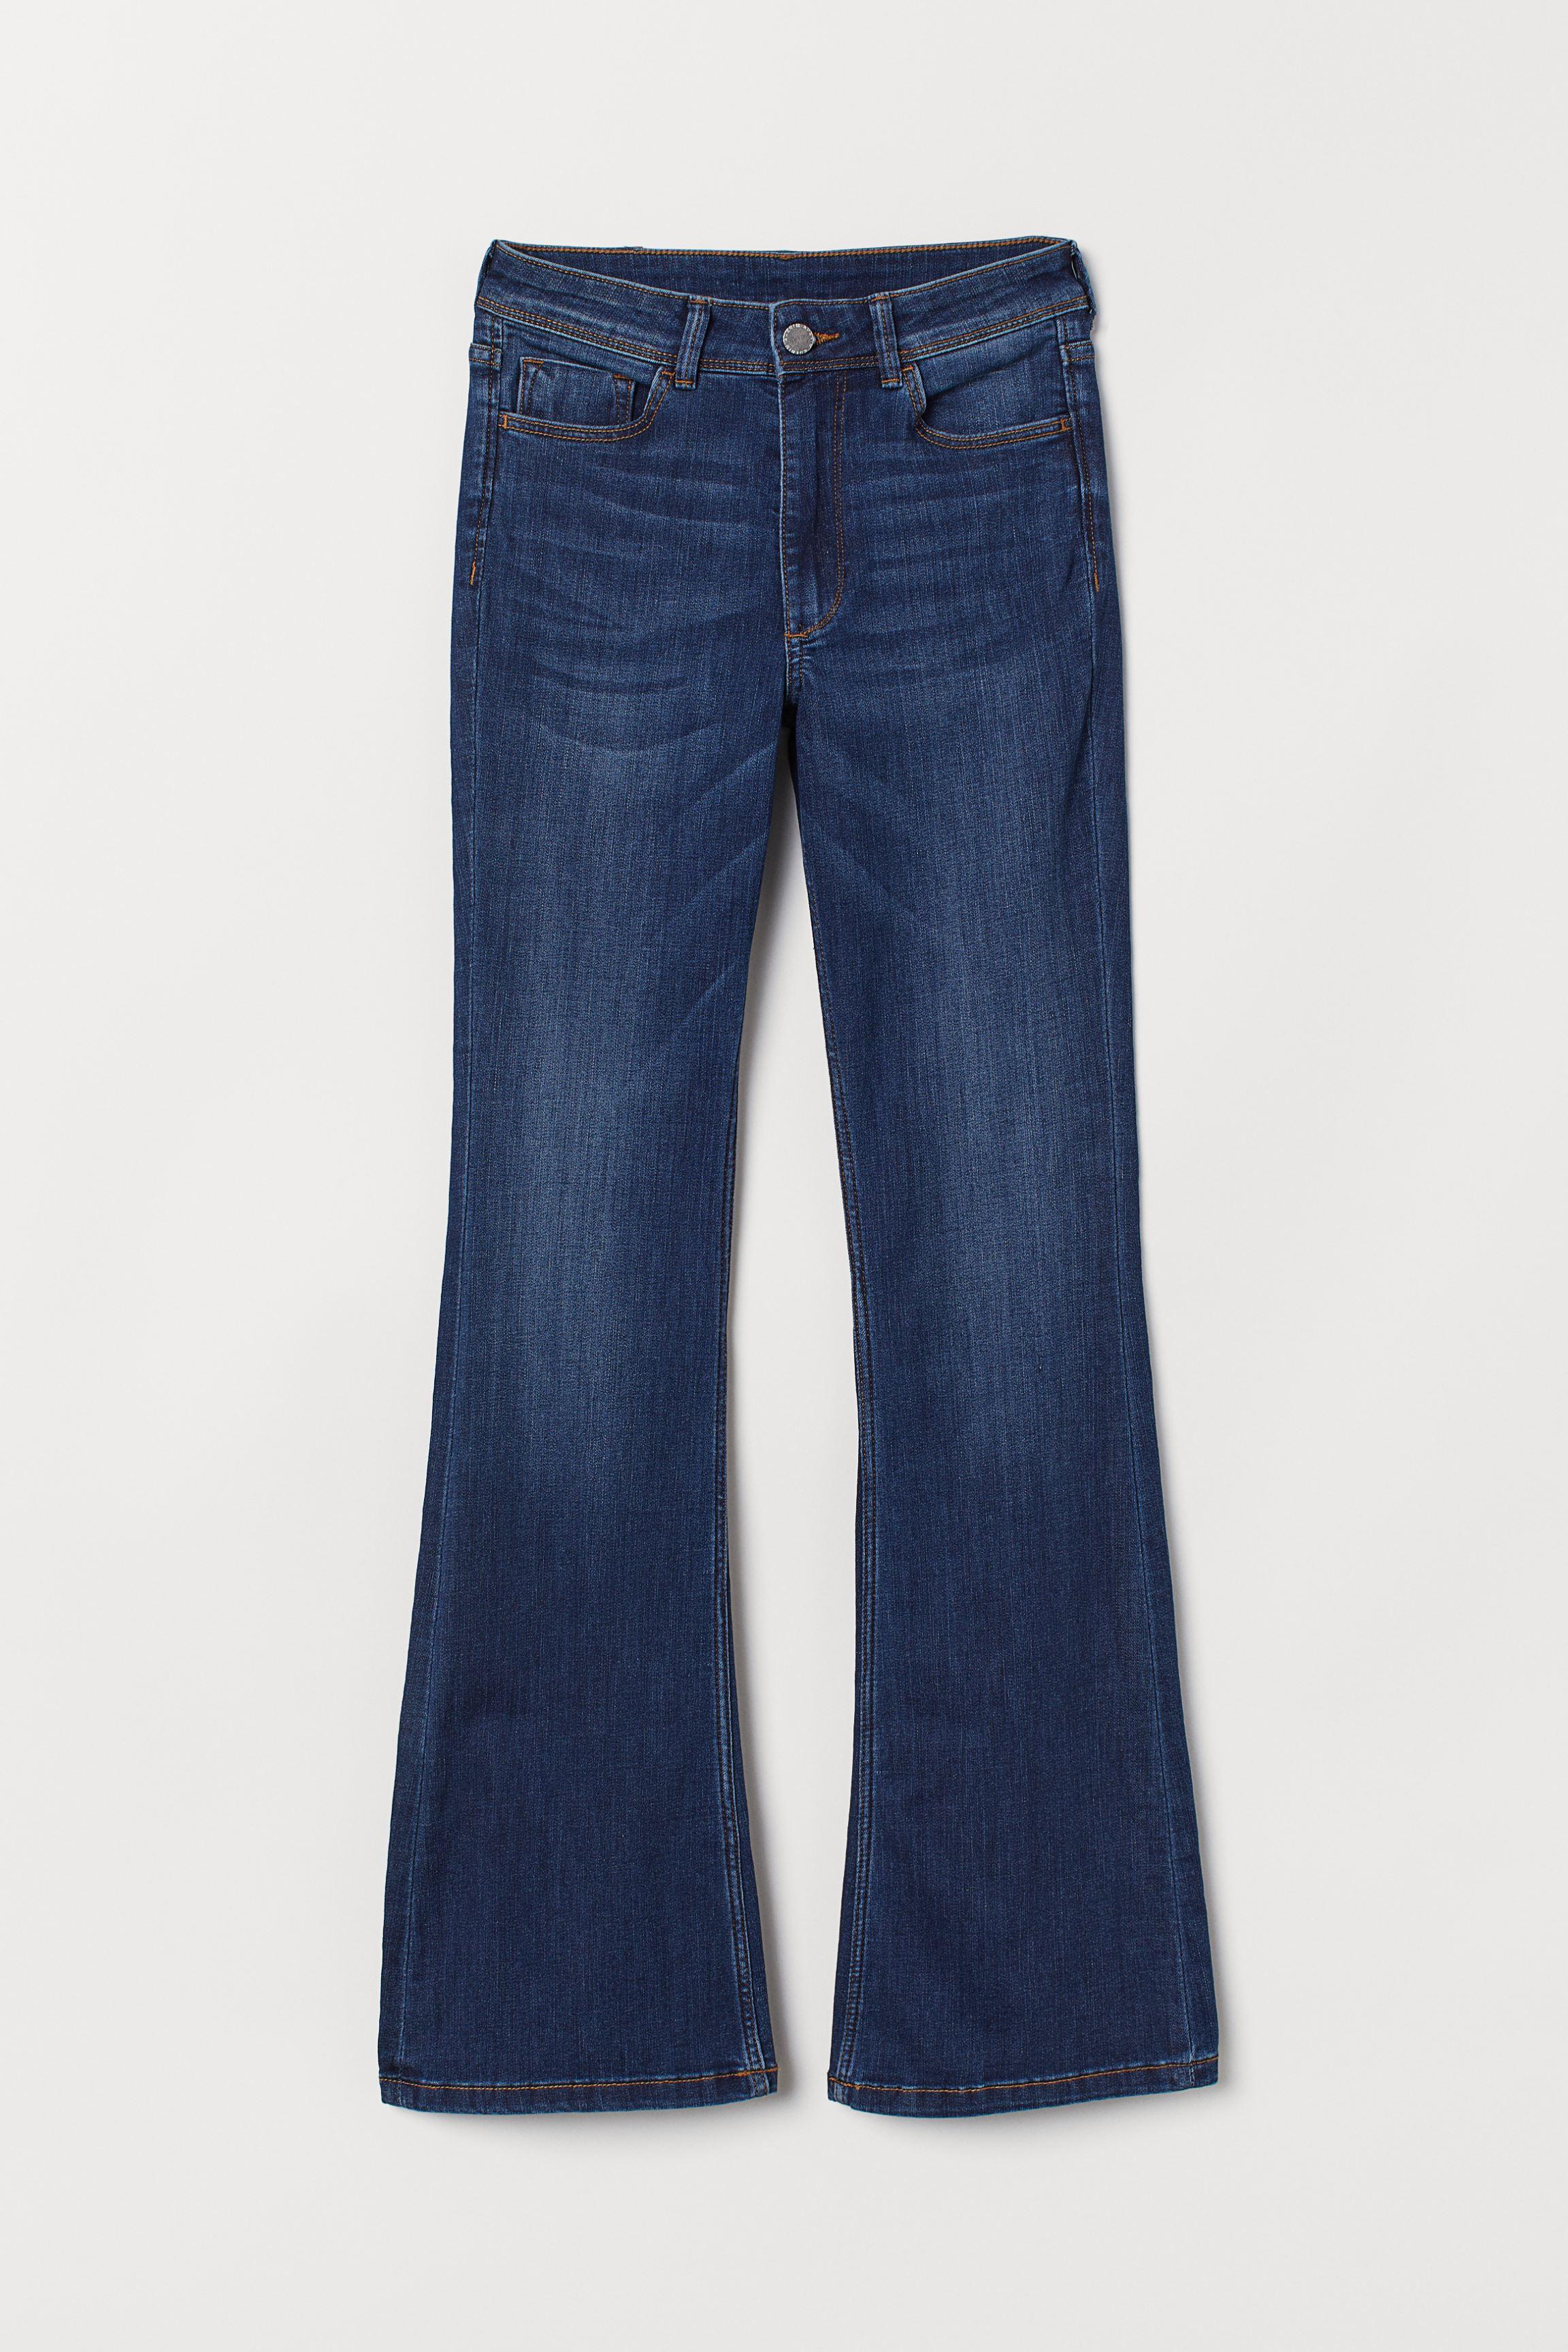 H&M Mini Flare High Jeans in Blue | Lyst